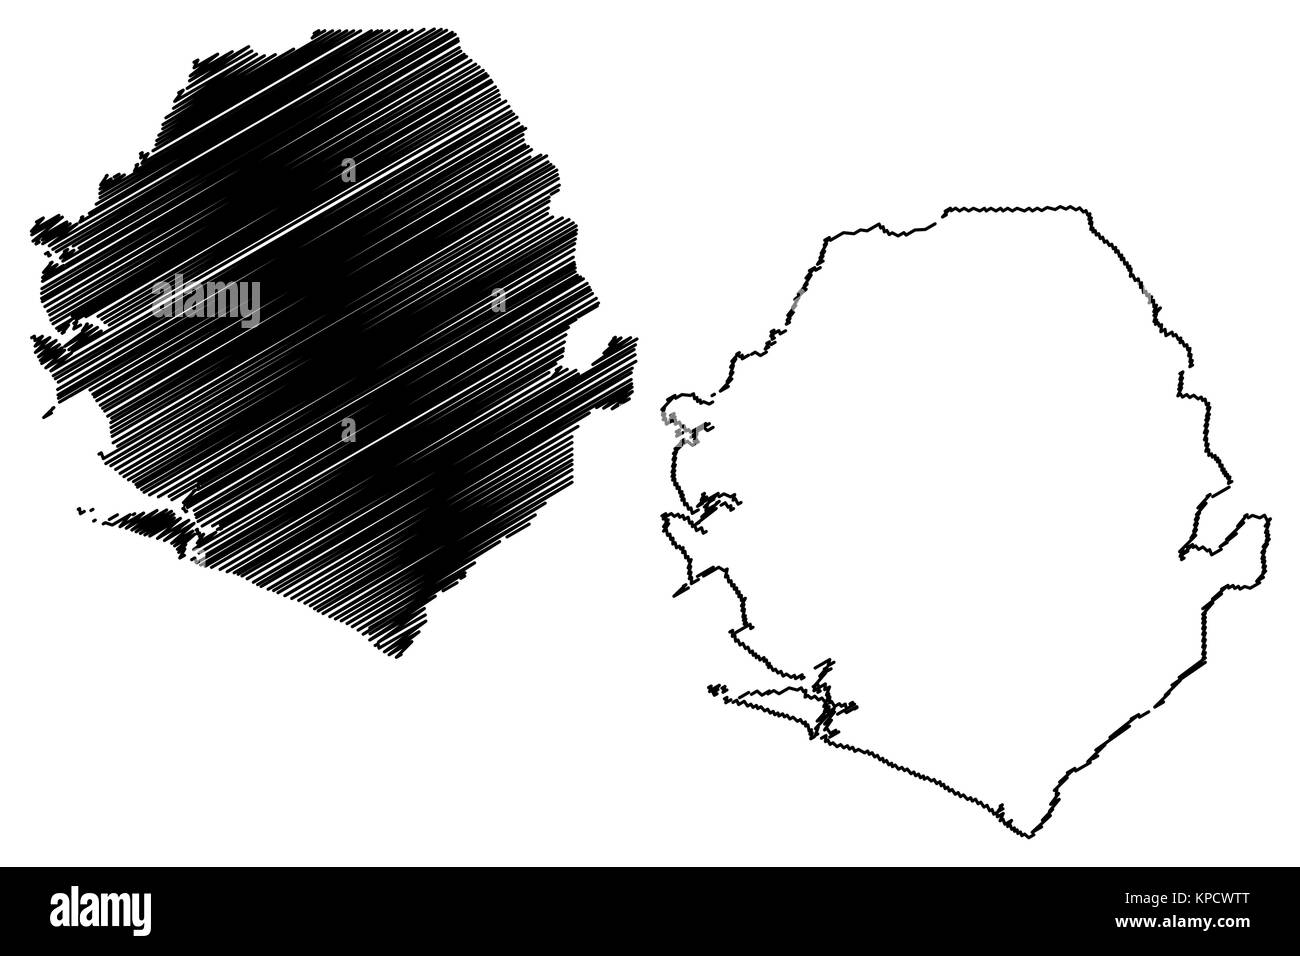 Sierra Leone karte Vektor-illustration, kritzeln Skizze Republik Sierra Leone Stock Vektor